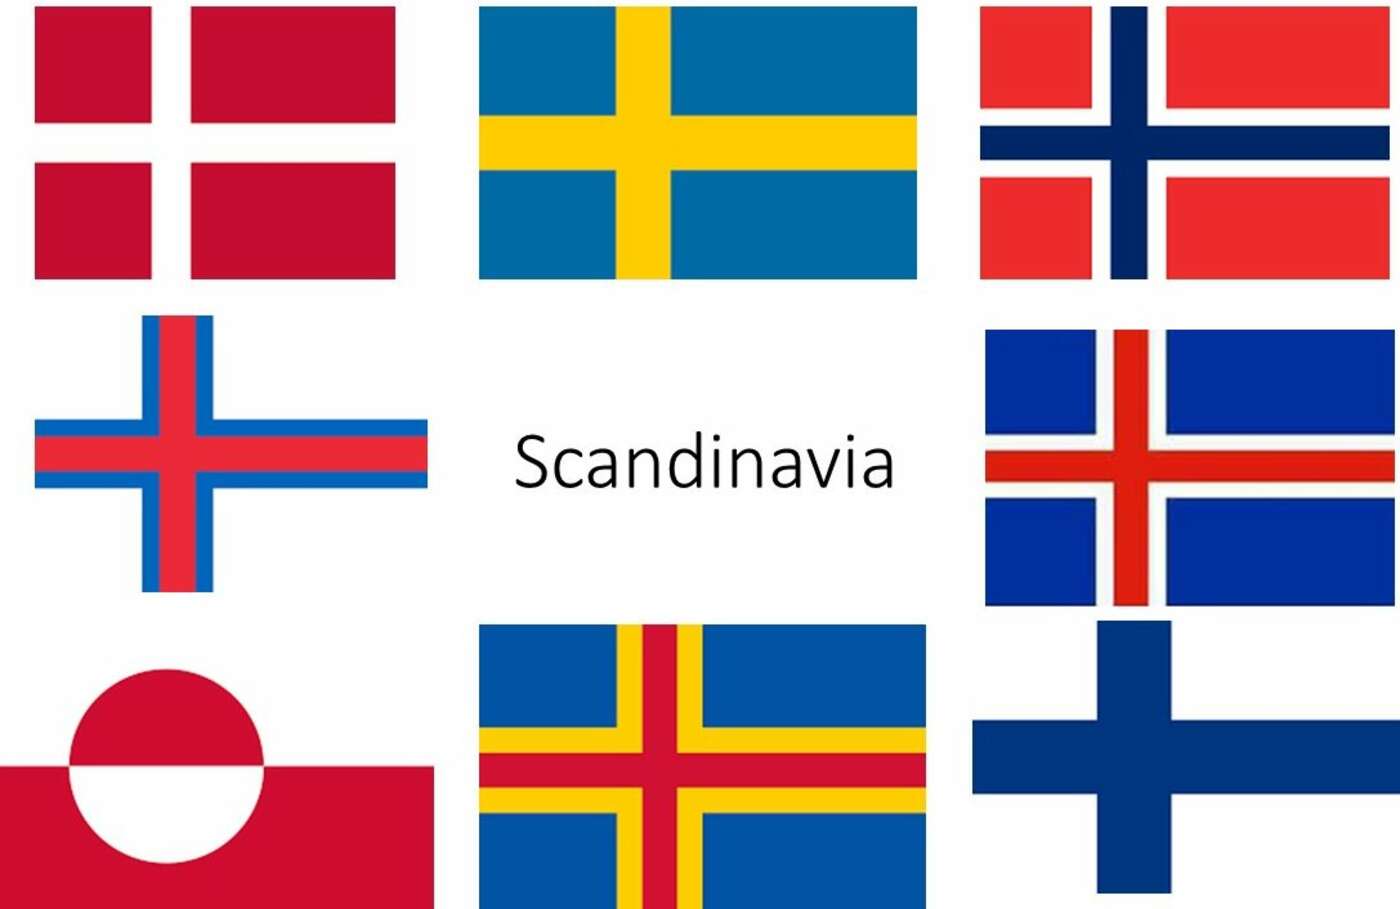 Clockwise, starting from the top left-hand corner: Denmark, Sweden, Norway, Iceland, Finland, Åland Islands, Greenland, Faroe Islands.